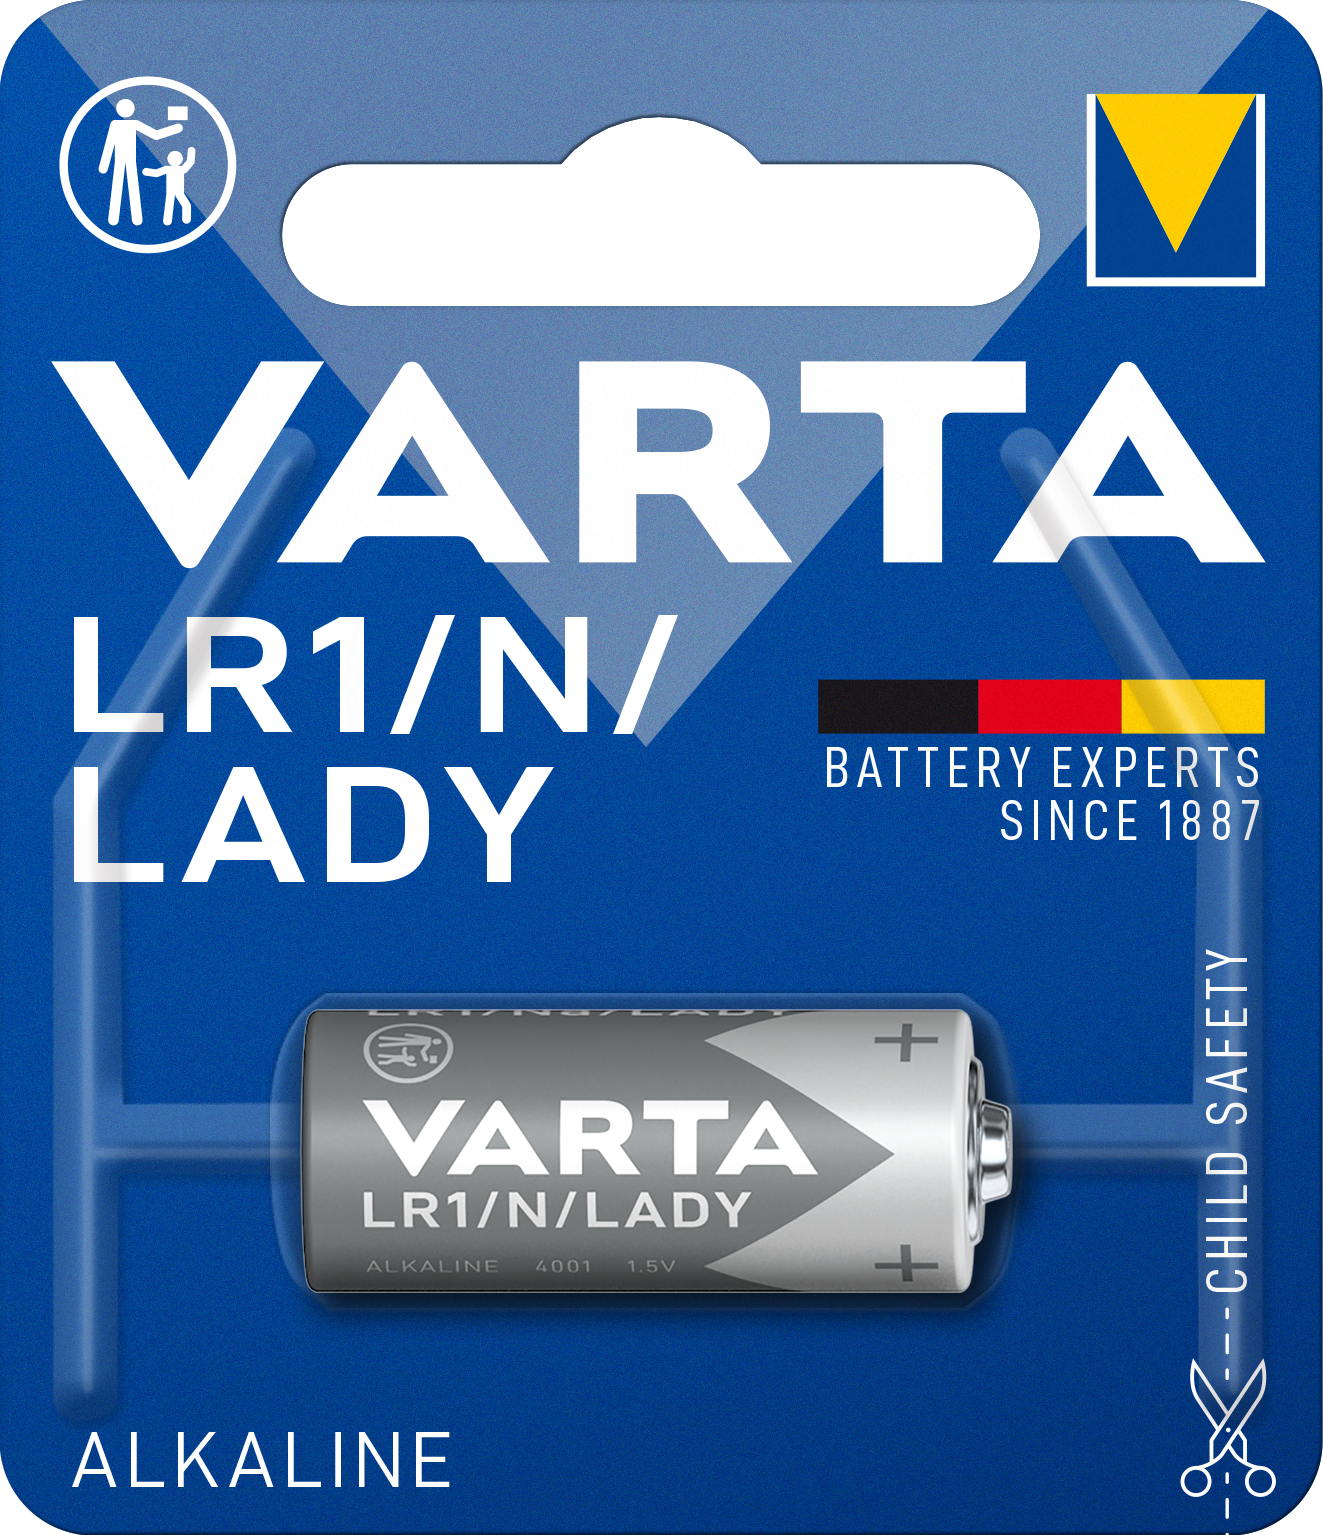 Lithium Batterie LR/N/LADY